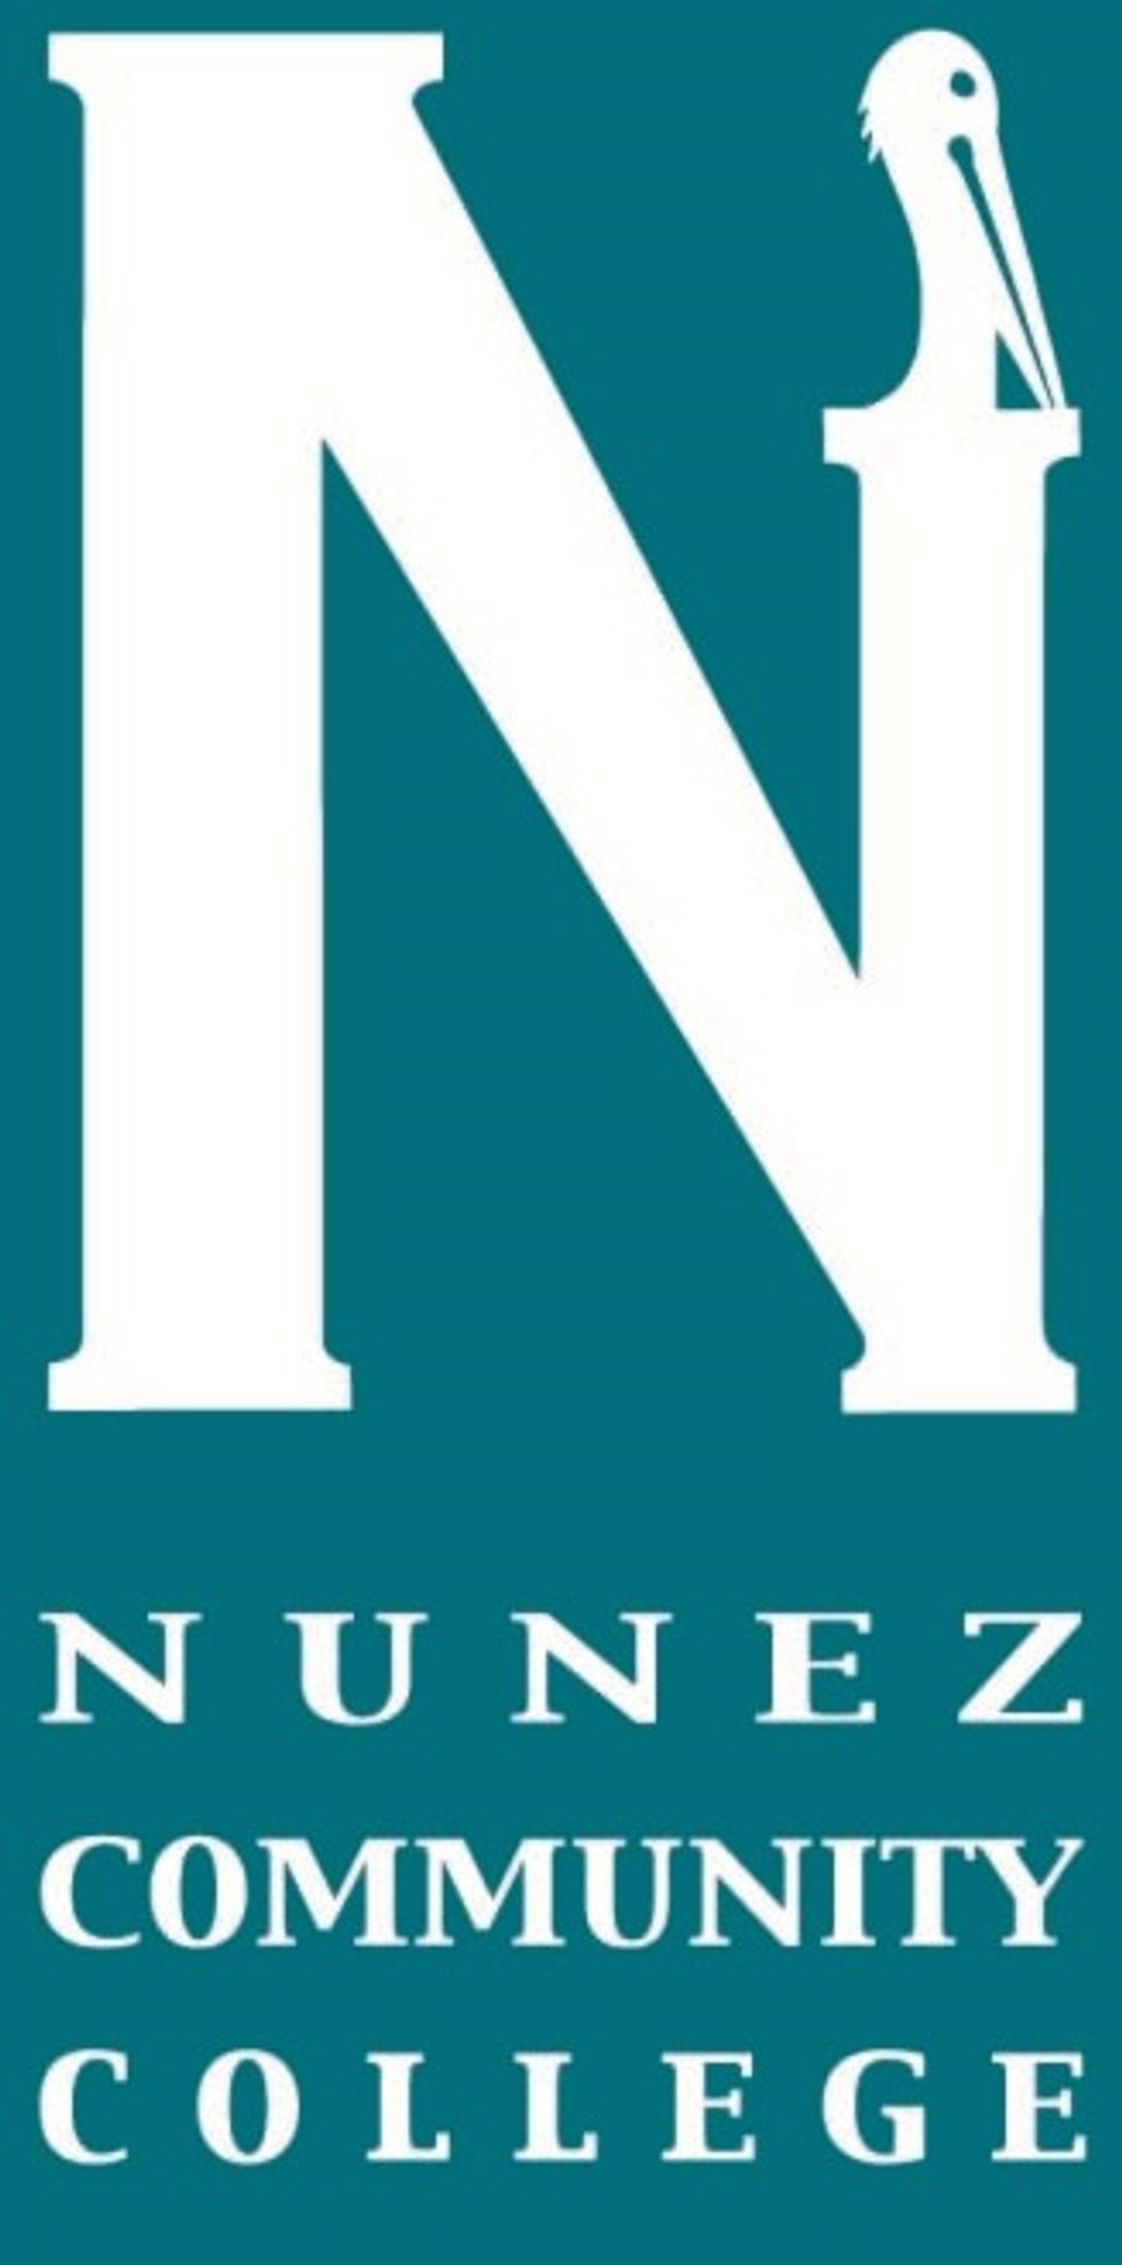 Nunez Community College Photo - Nunez Community College logo.